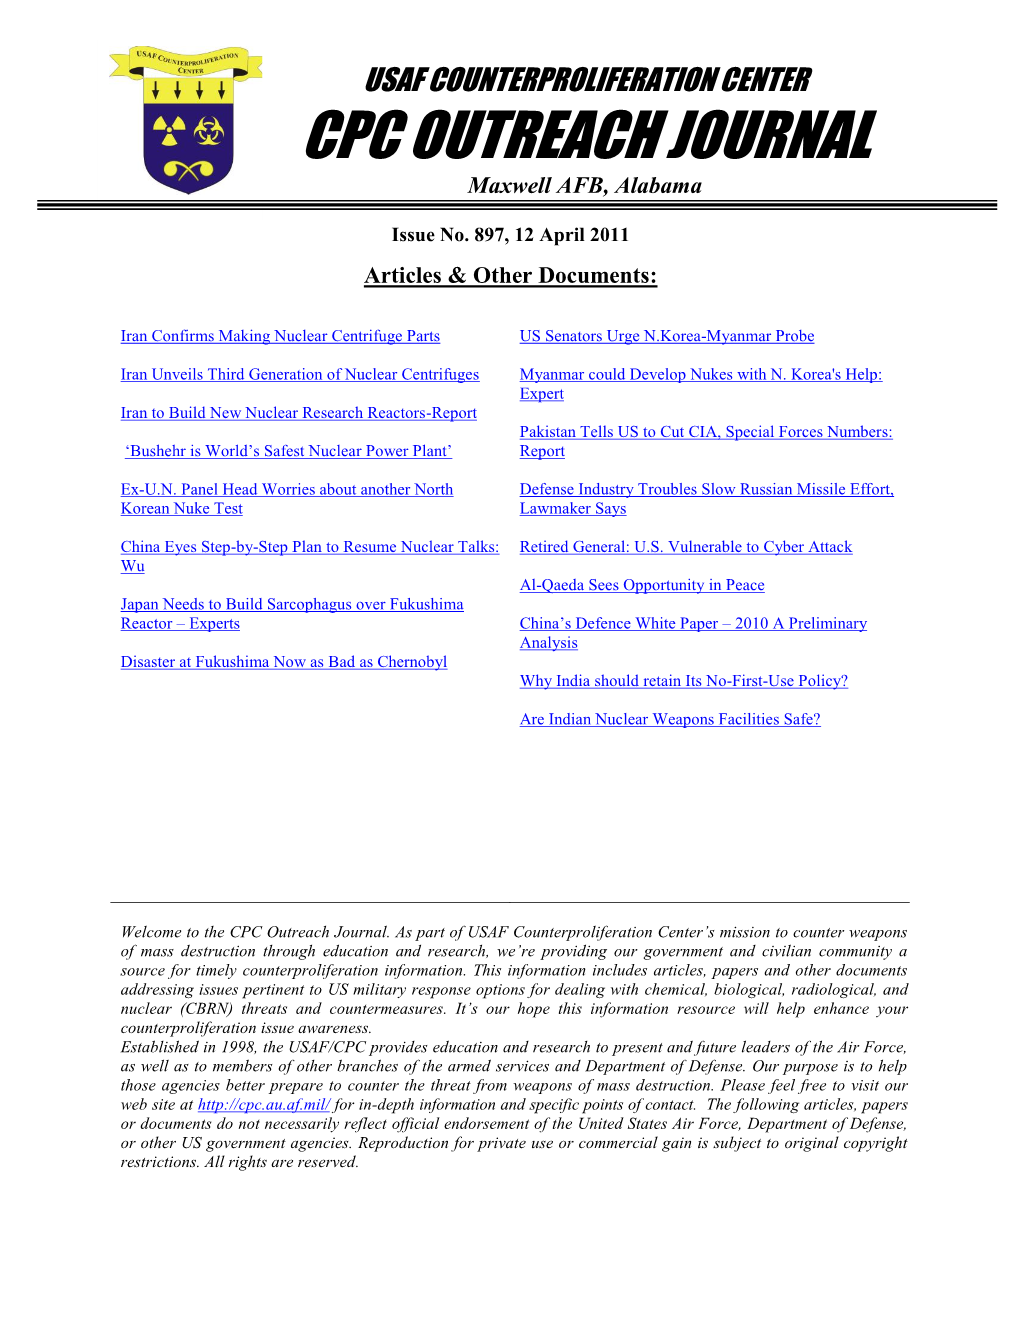 USAF Counterproliferation Center CPC Outreach Journal #897